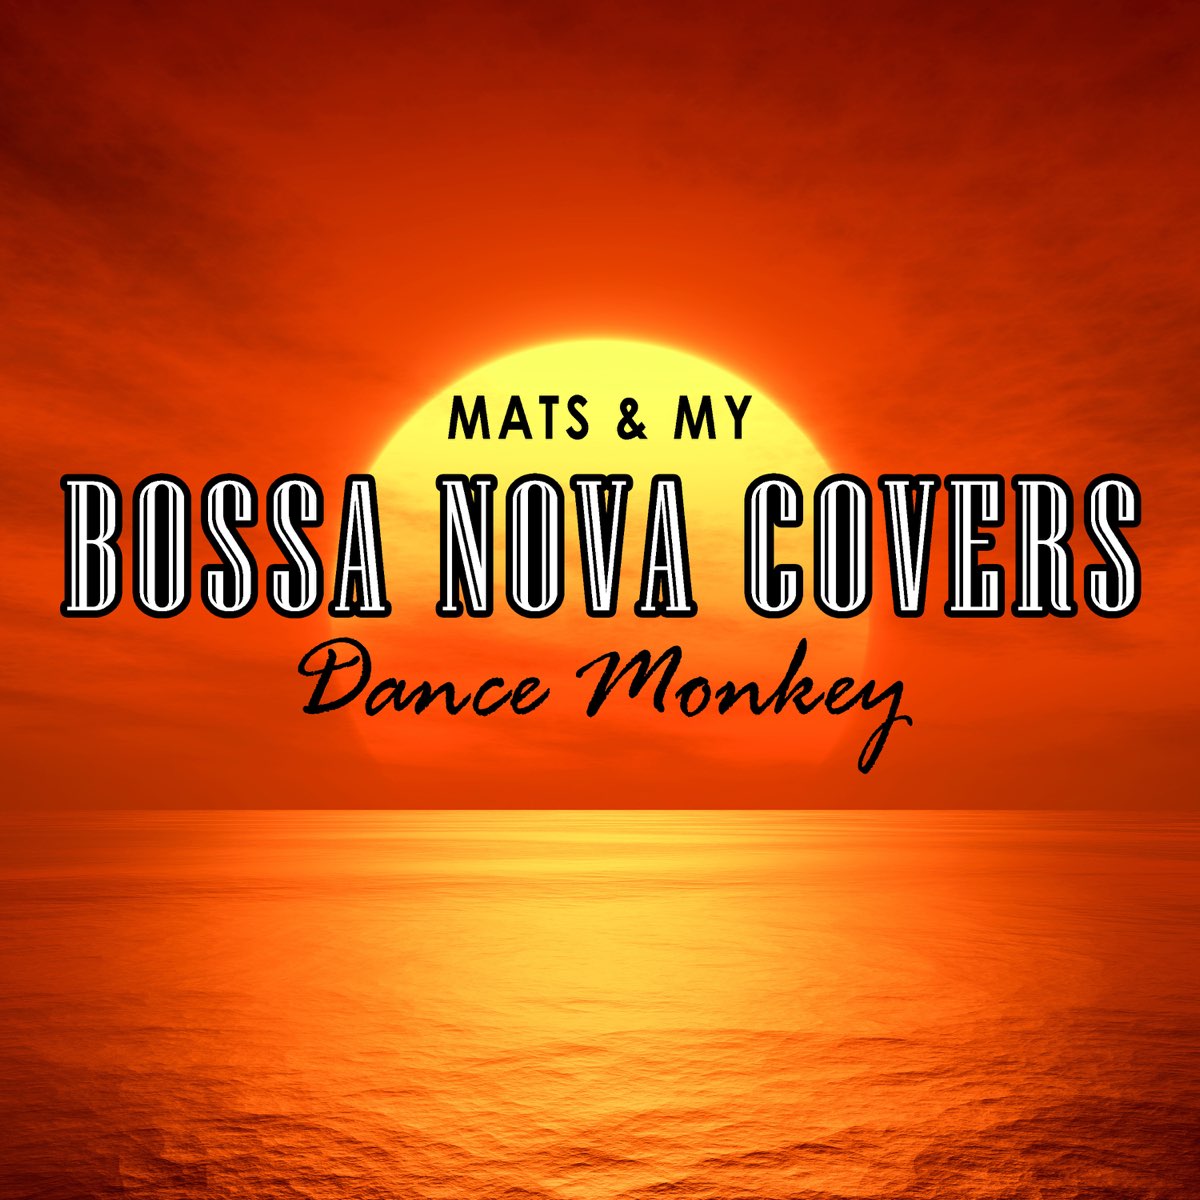 ‎Dance Monkey - Single - Album by Bossa Nova Covers & Mats & My - Apple ...